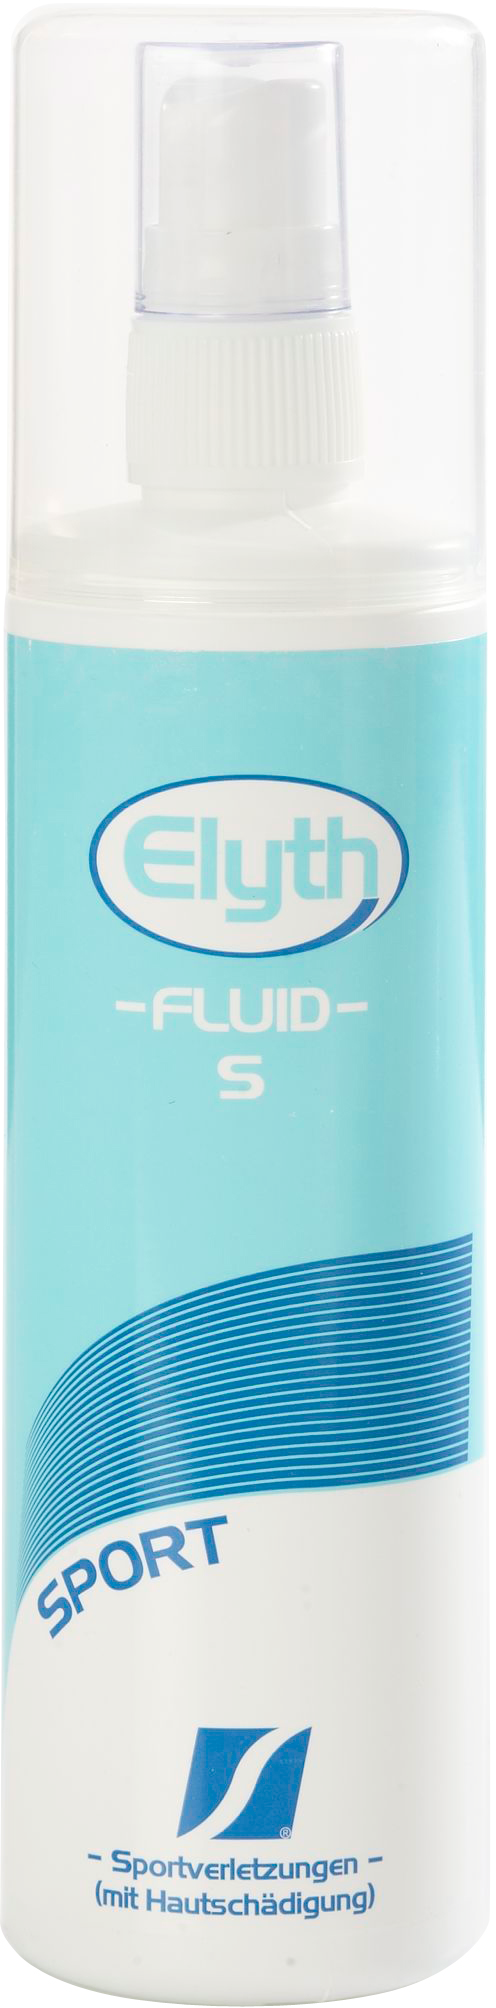 Elyth S Fluid, 200ml Spray